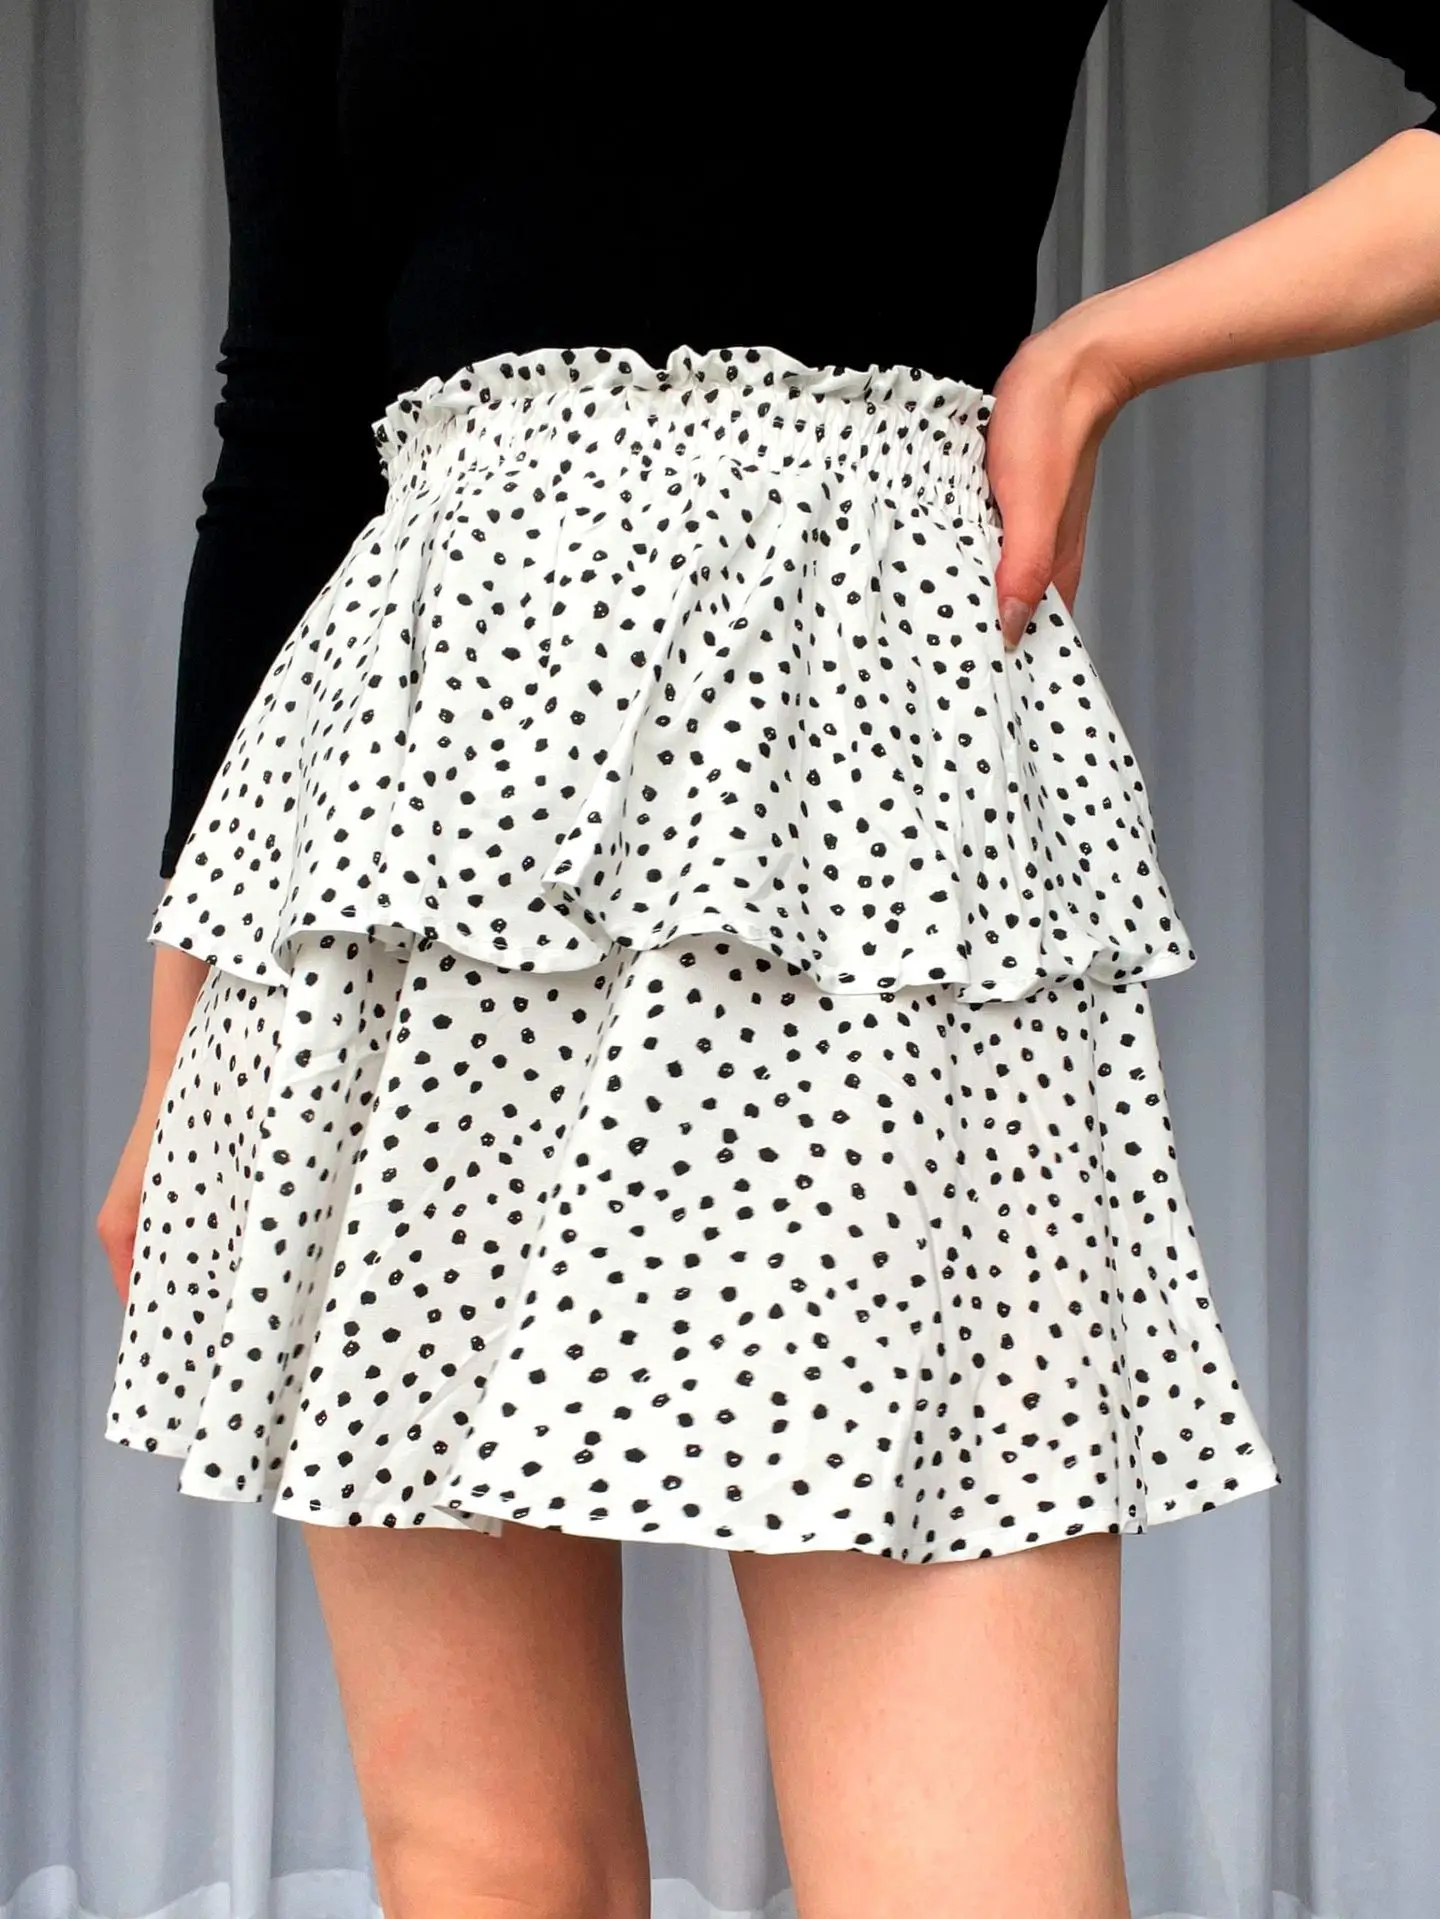 YingTang Women's skirts Classic High Waist Casual Flared A-Line Skater Dress Polka Dot Mini Skirt